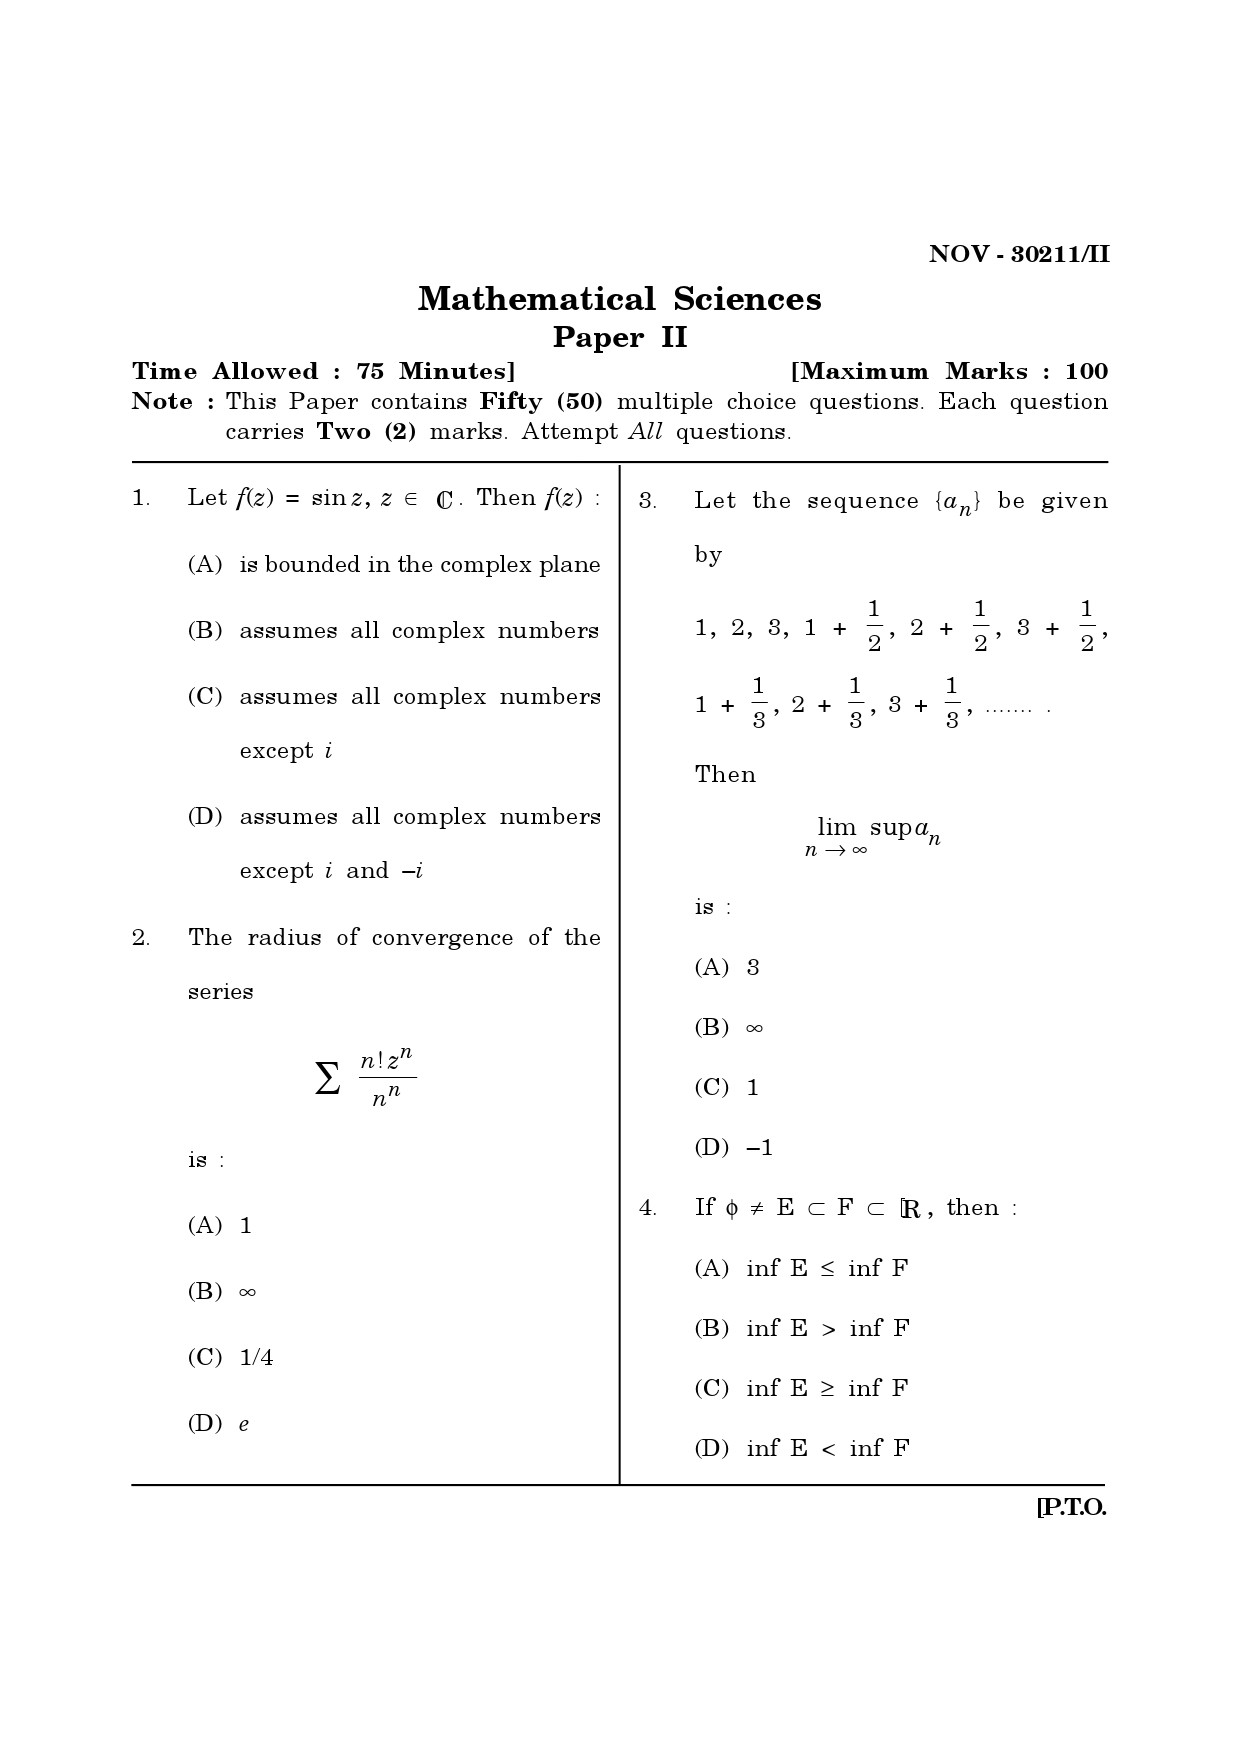 Maharashtra SET Mathematical Sciences Question Paper II November 2011 1